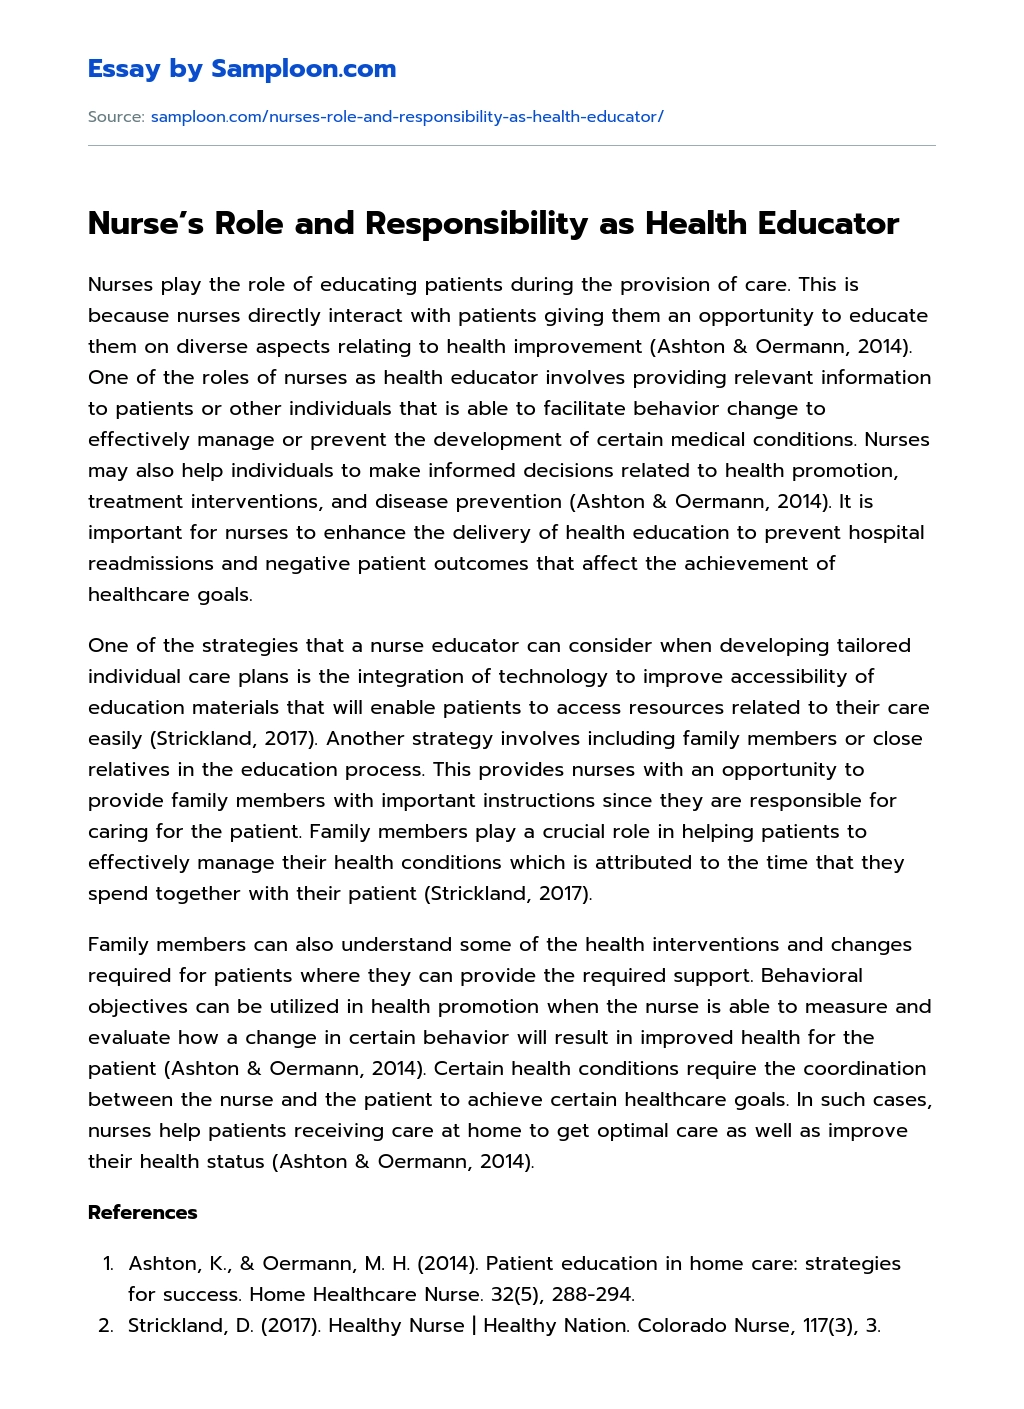 Nurse’s Role and Responsibility as Health Educator  essay